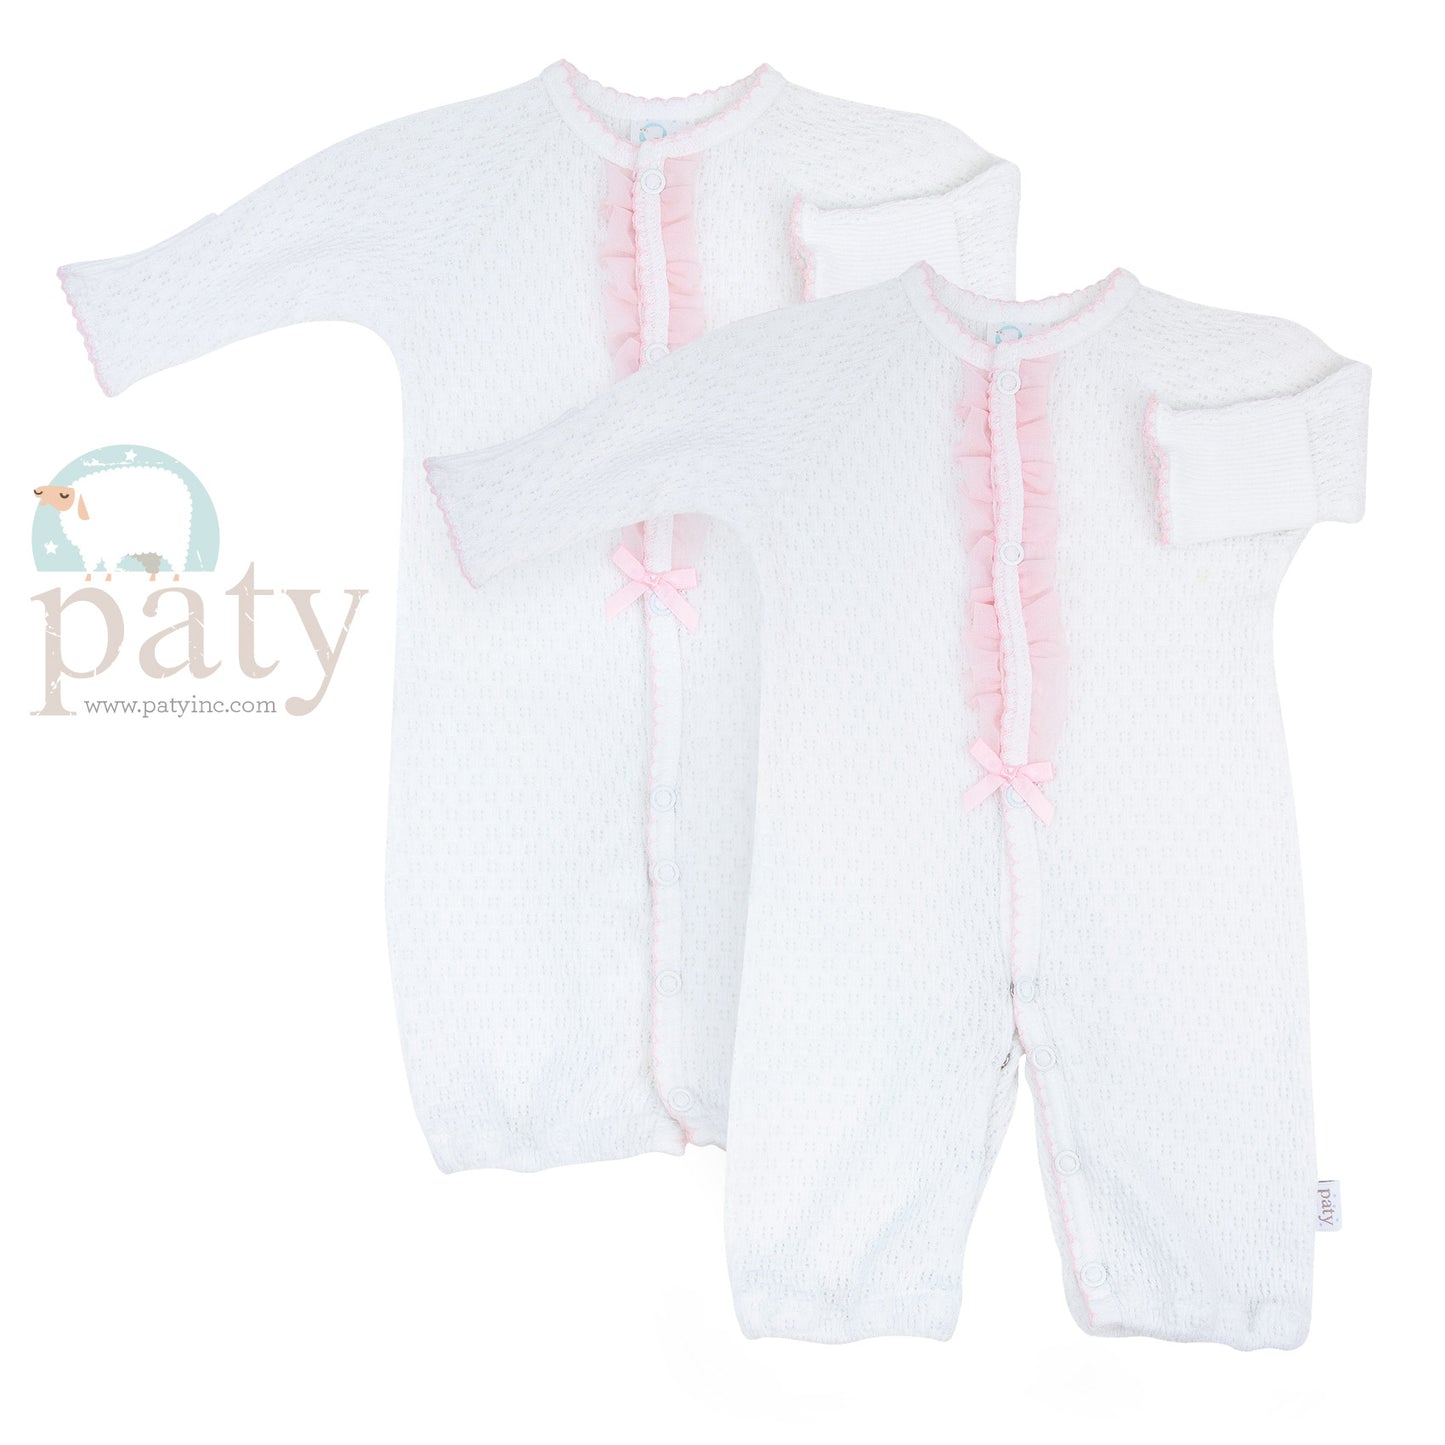 Paty Inc Newborn Converter White/Pink Chiffon Trim